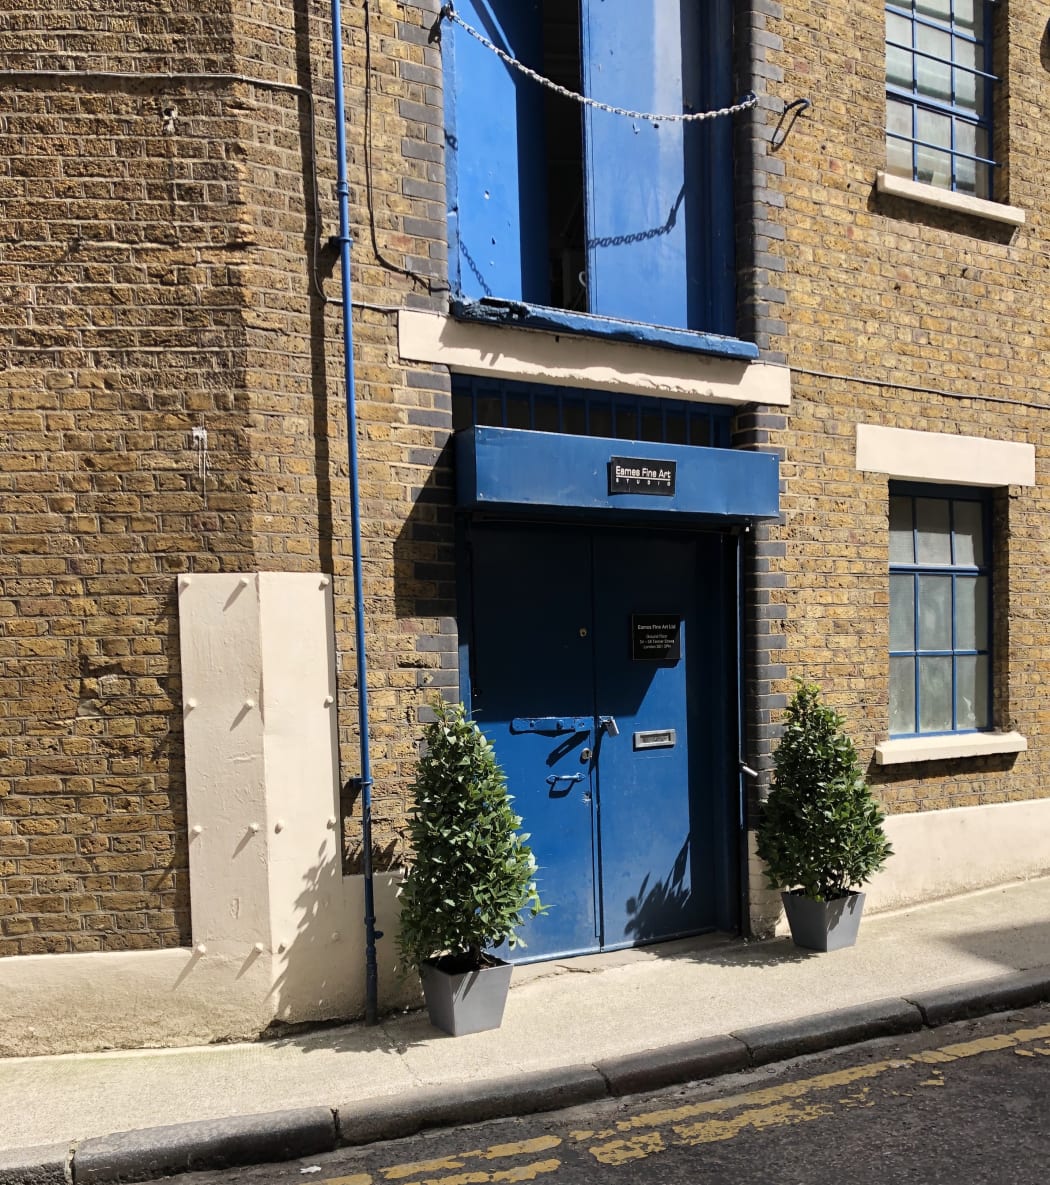 Bermondsey Street and Tanner Street - a brief history of our neighbourhood